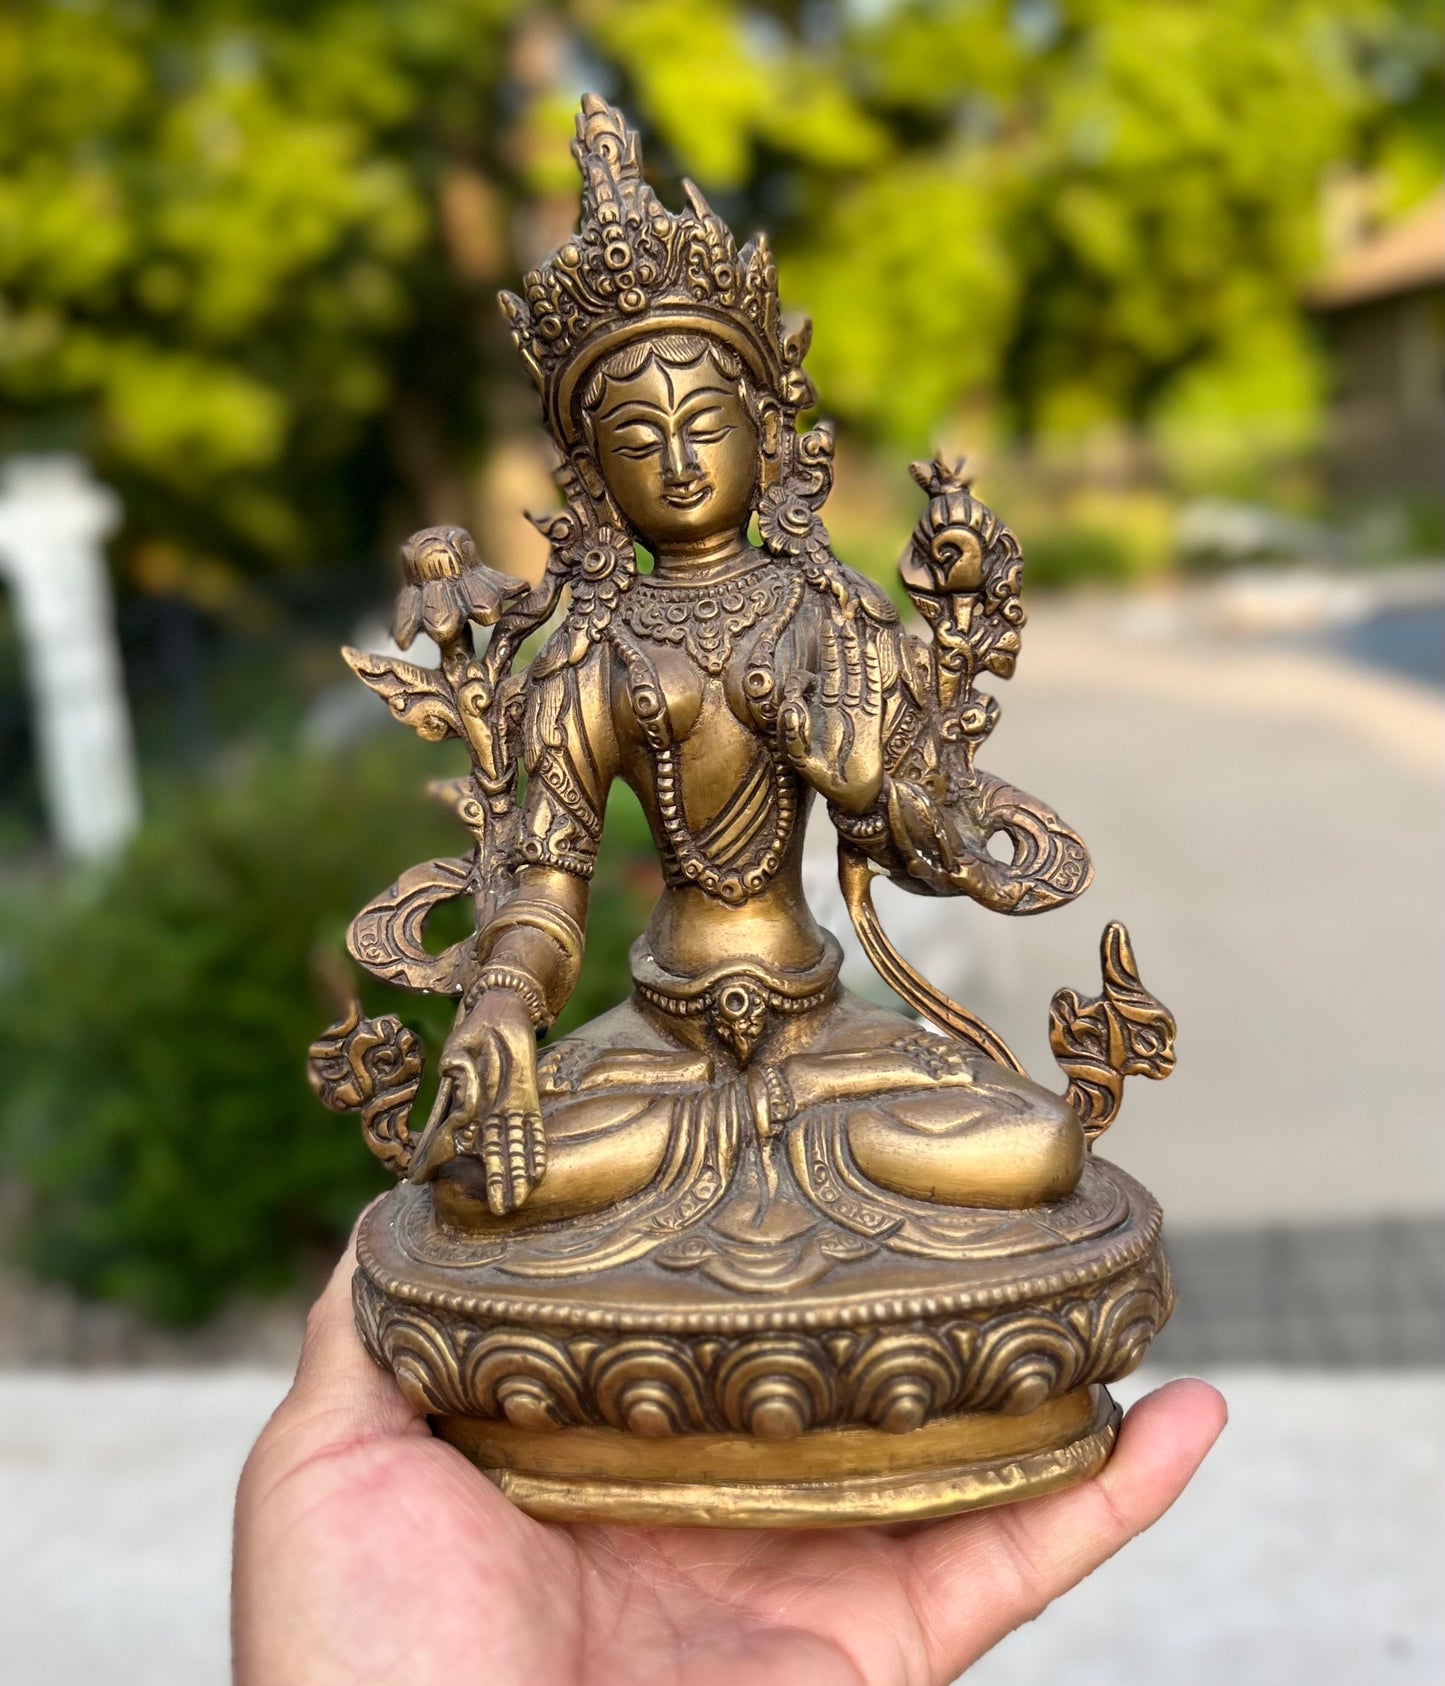 White Tara Female Buddha Statue Solid Brass for Home Altar Shrine Meditation Room 8.5 Inches Tall